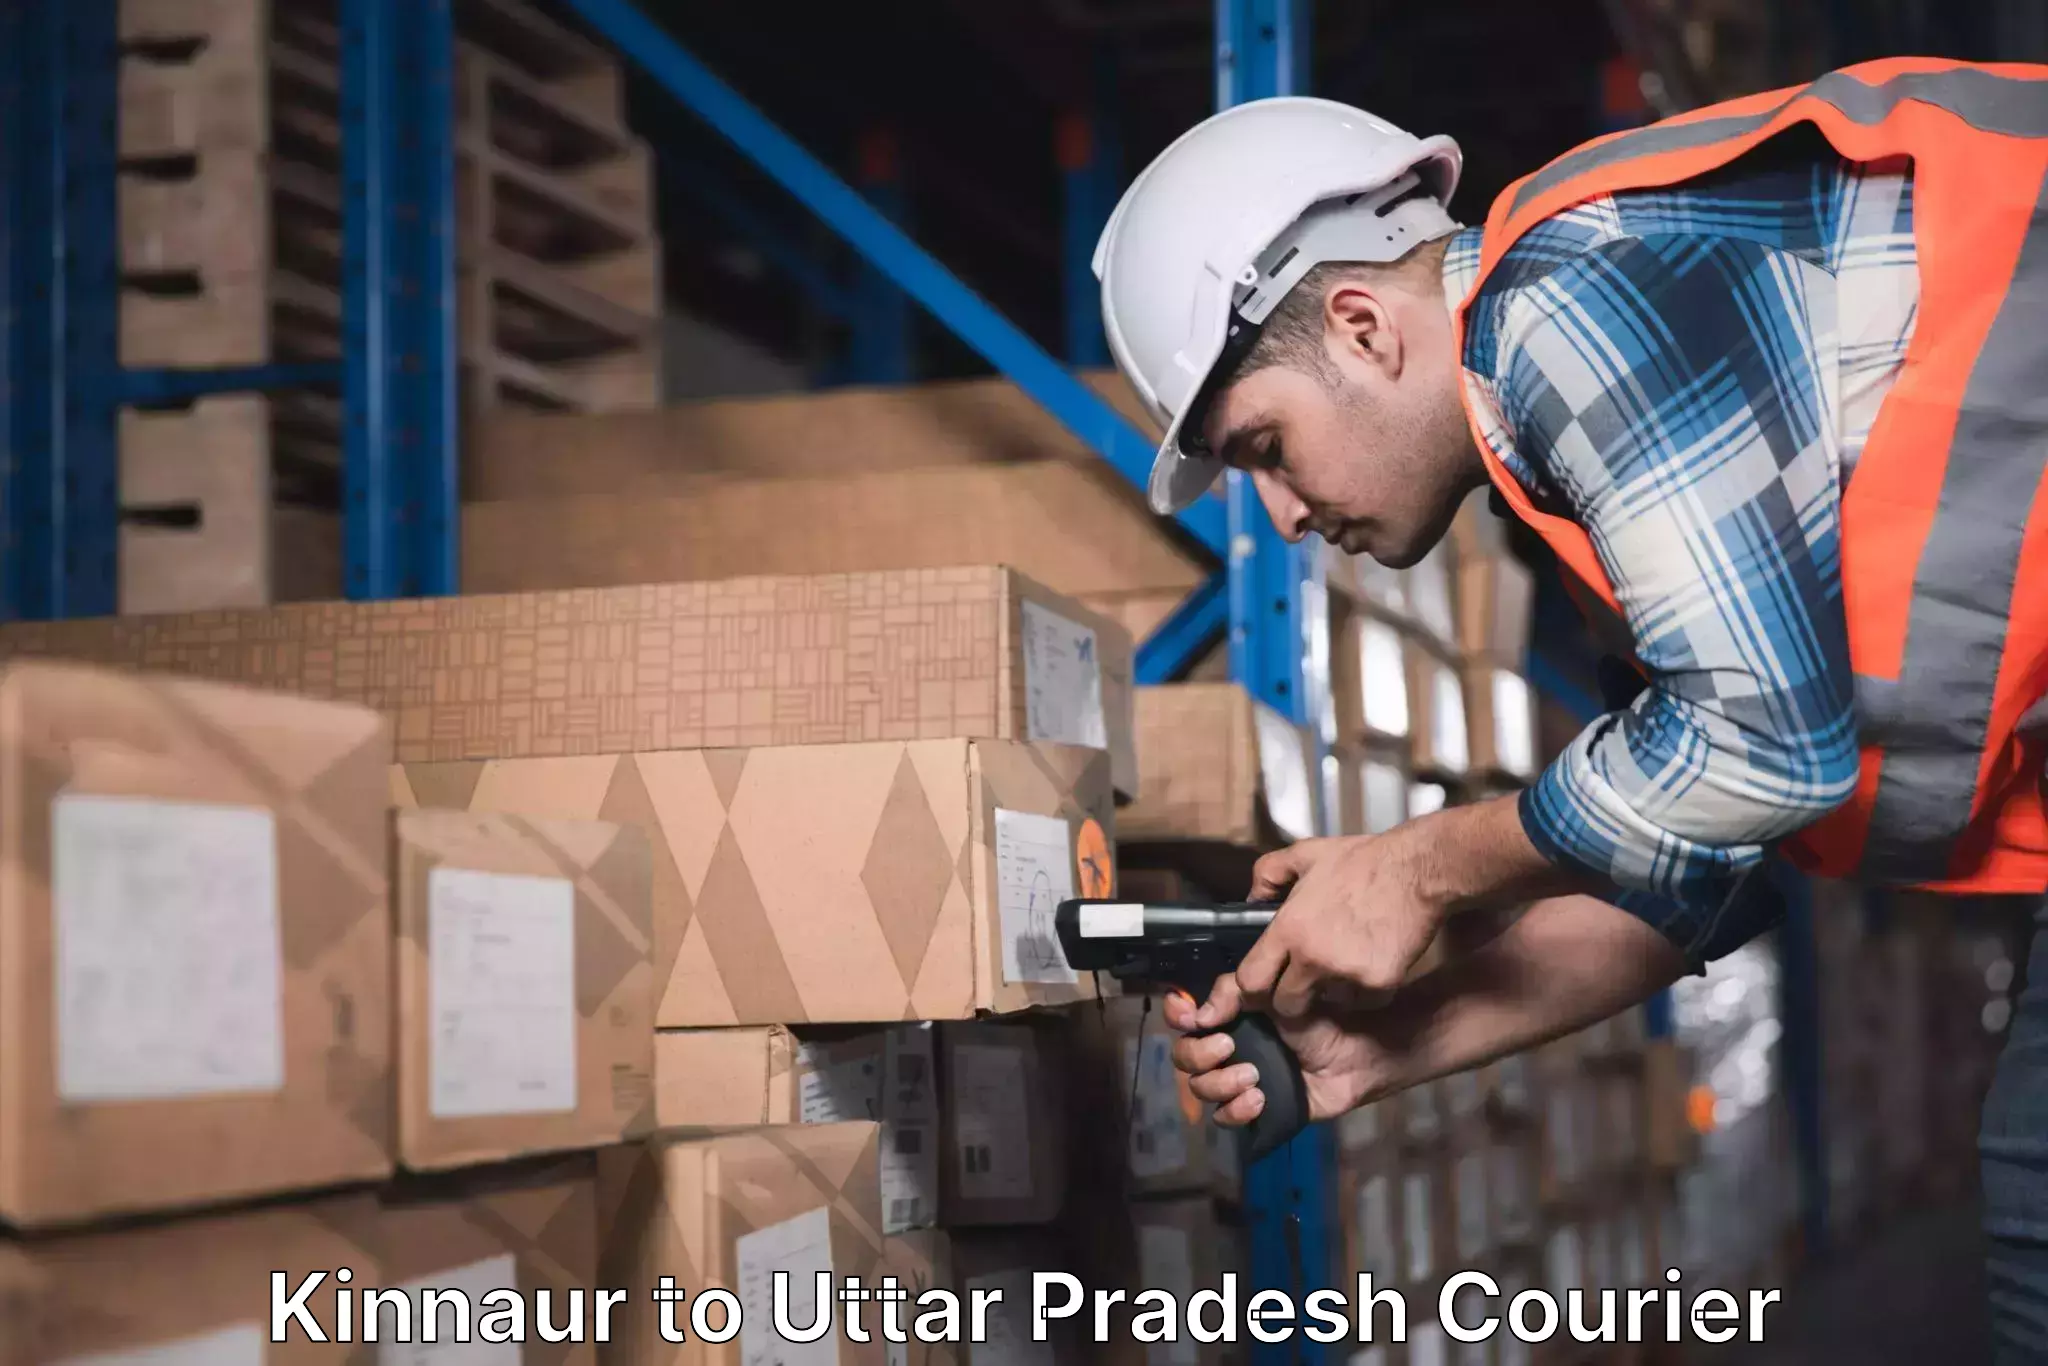 Global courier networks Kinnaur to Agra